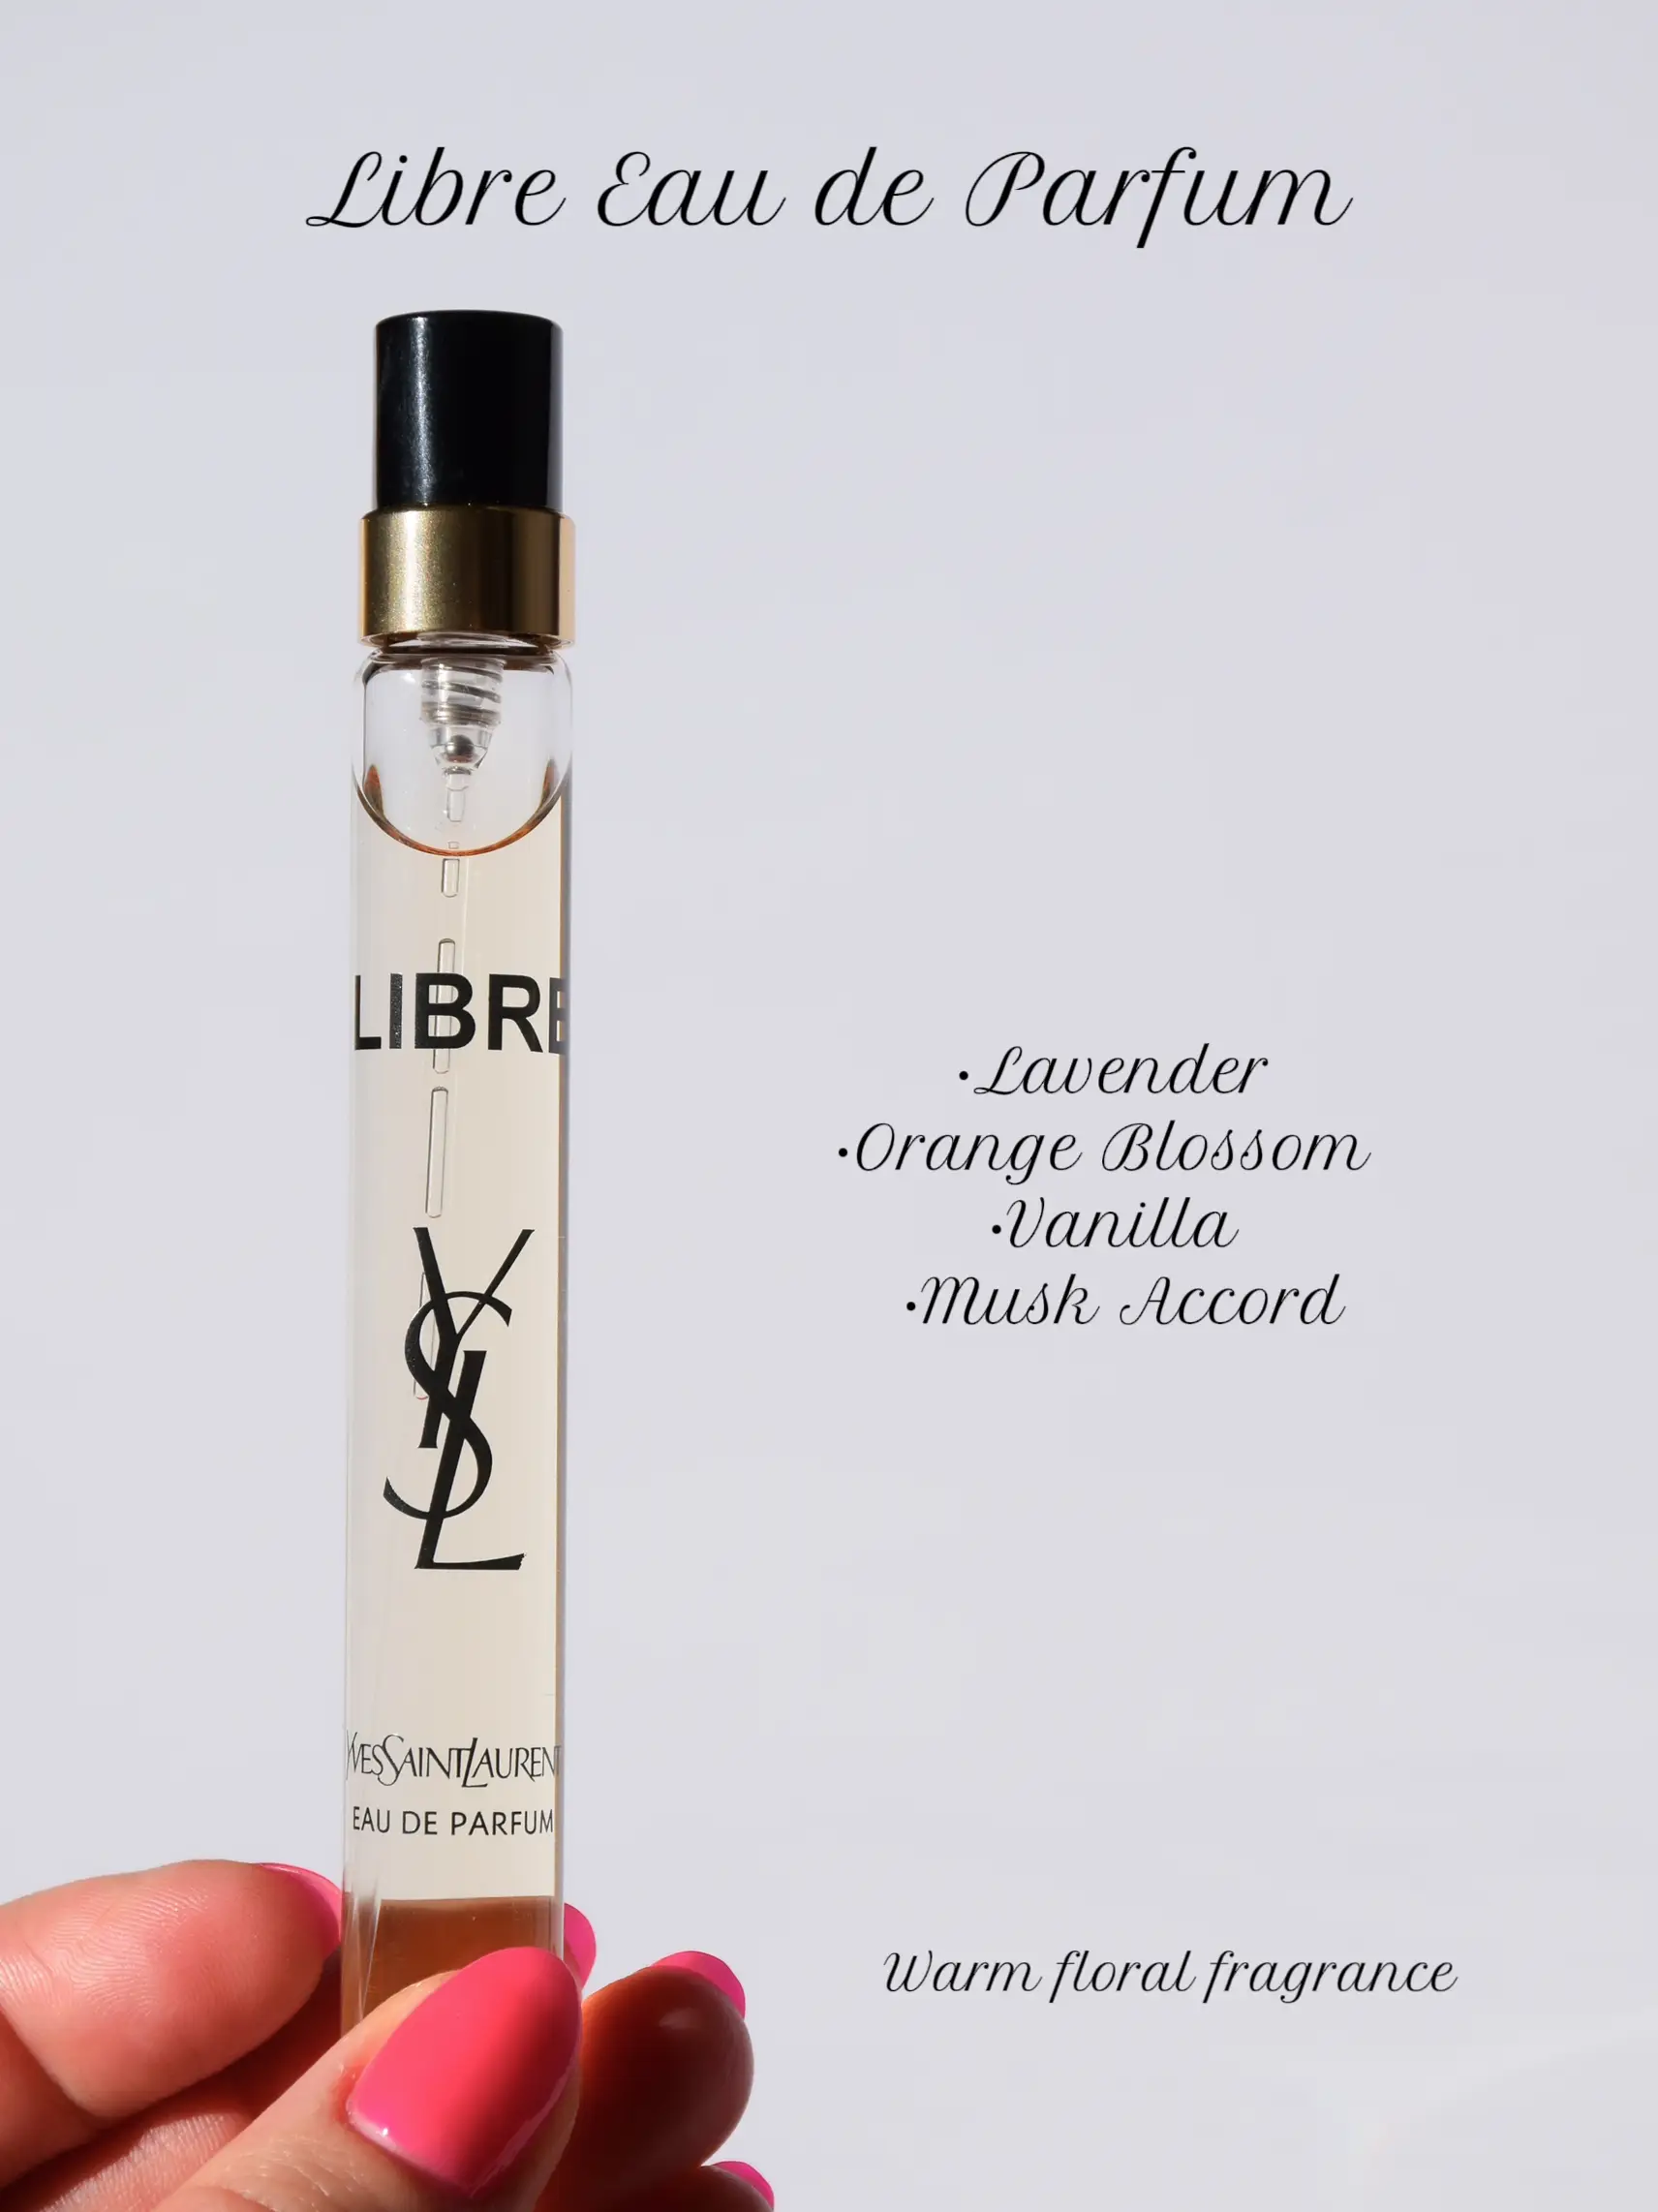 Libre Ysl Impression - Floral Lavender - Dossier Perfume - Woman - Perfume Dupe